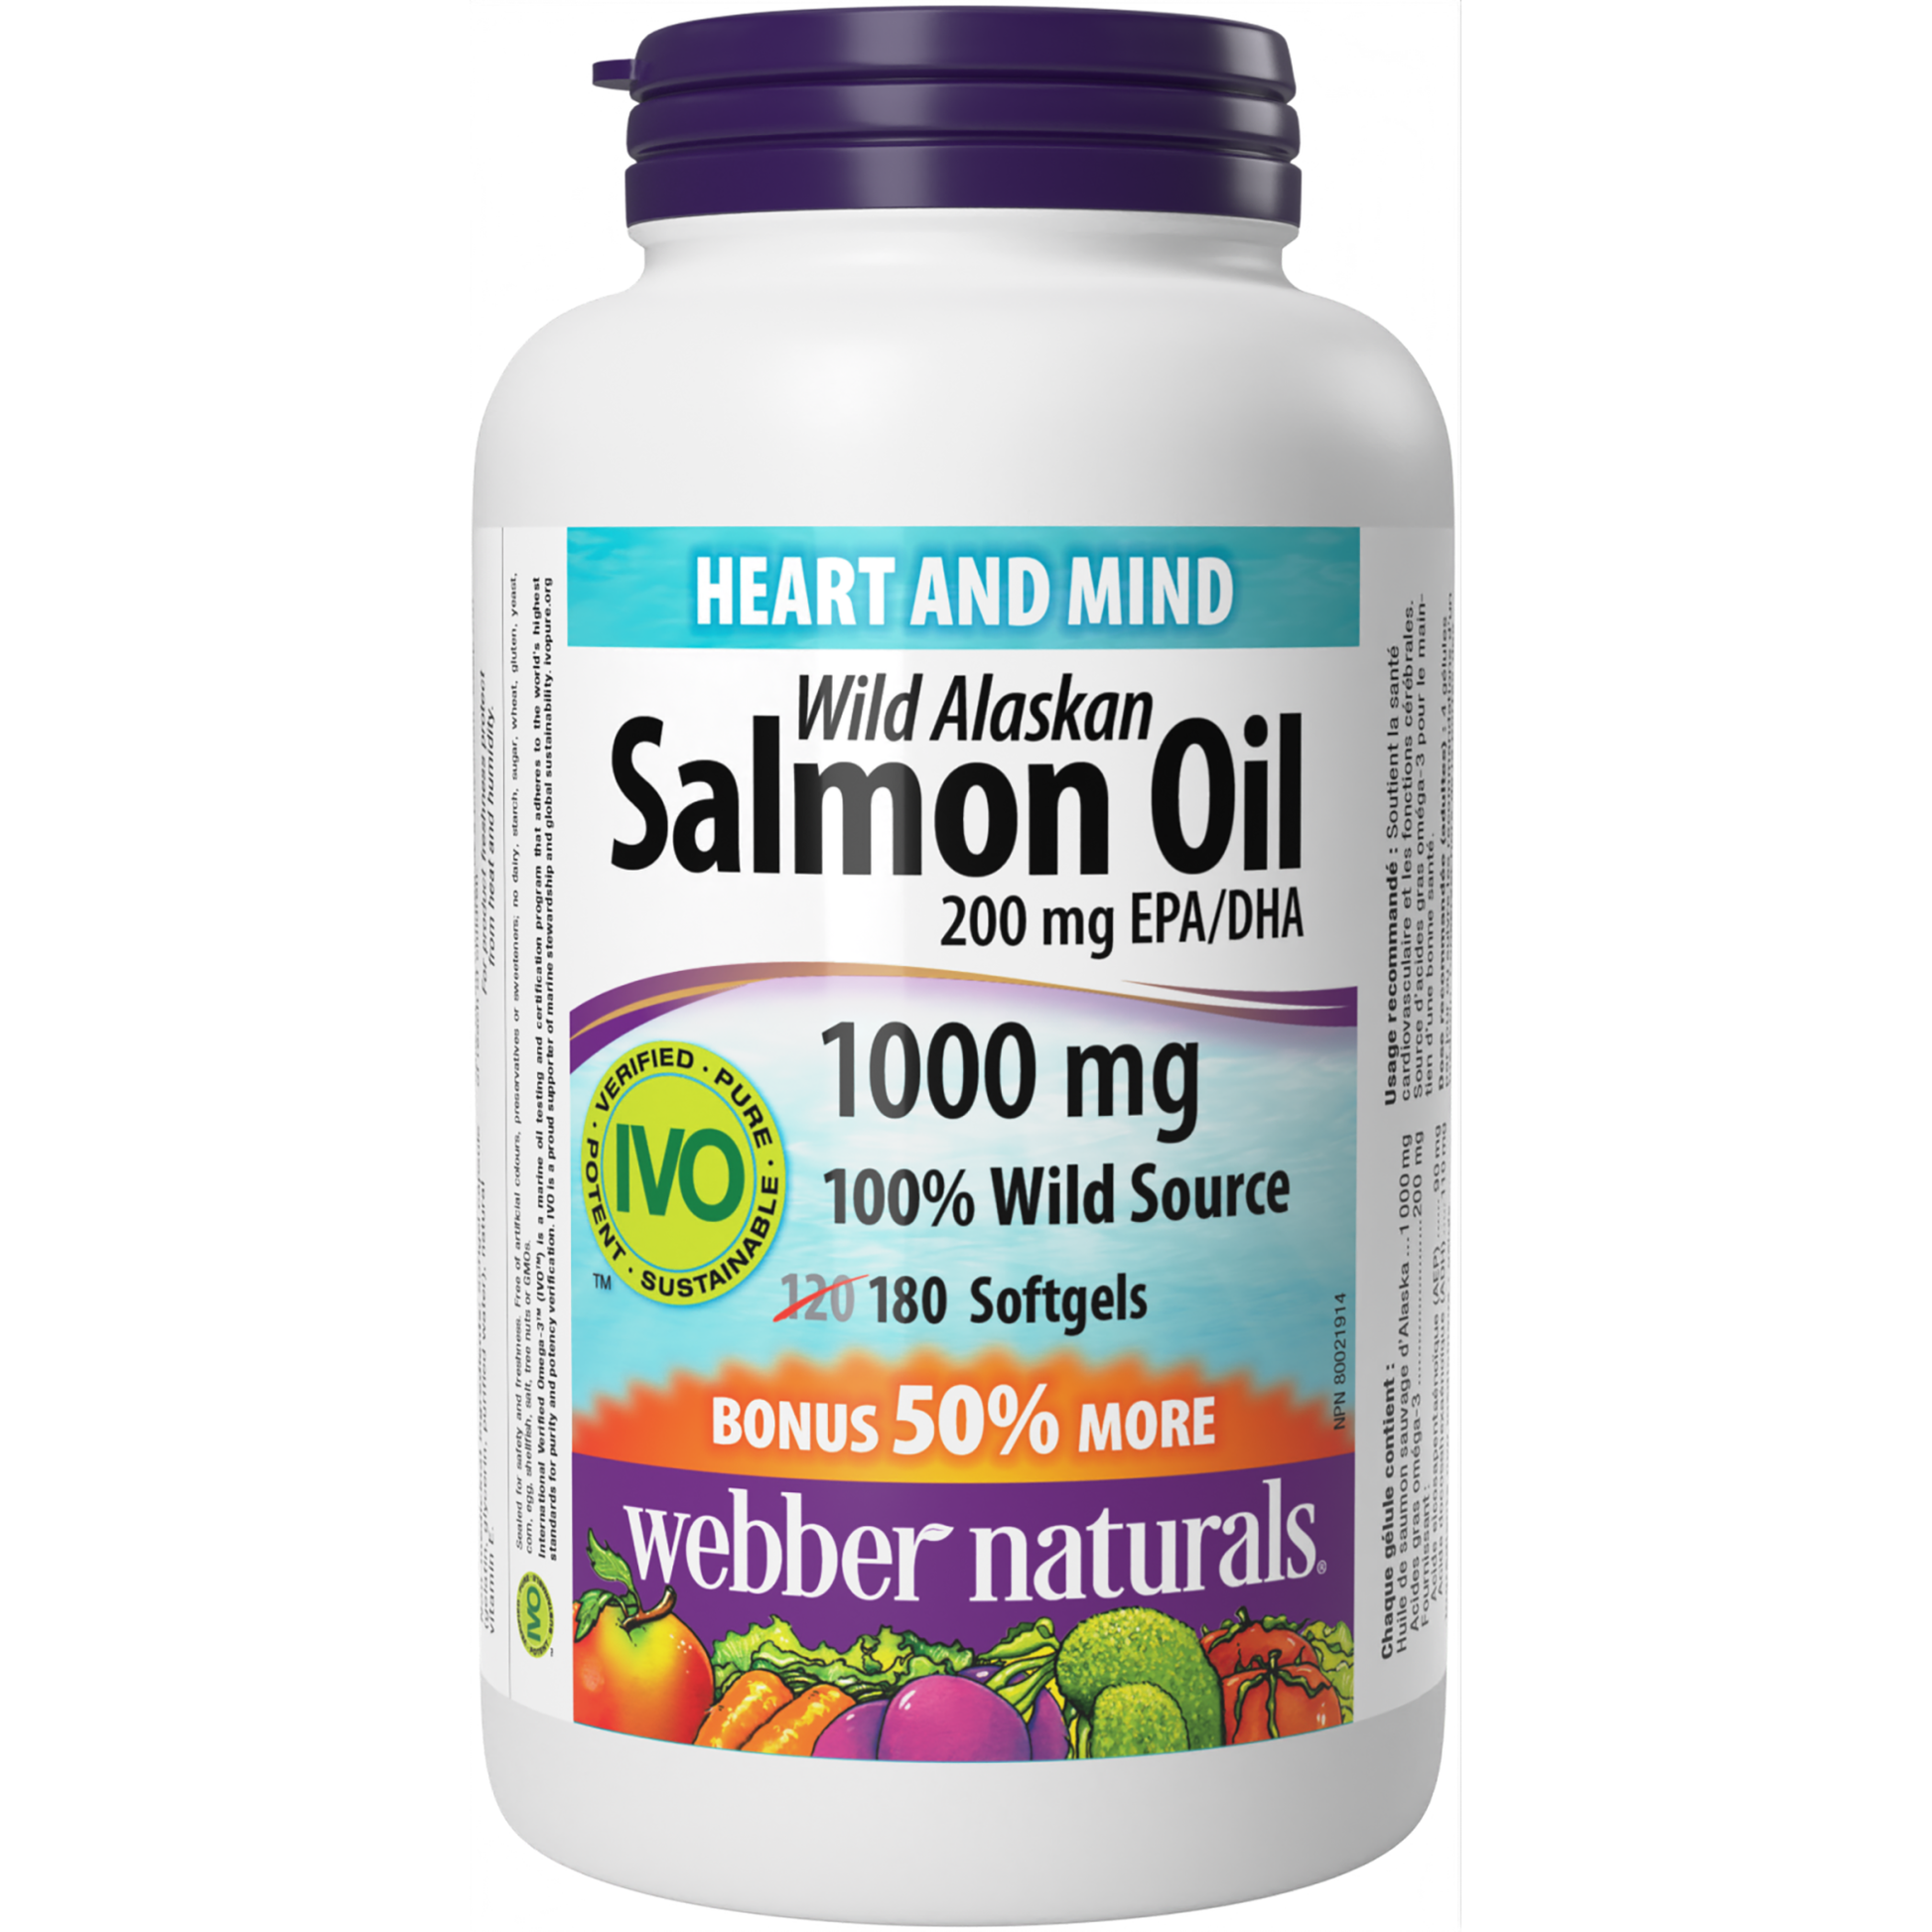 Wild Alaskan Salmon Oil 200 mg EPA/DHA 1000 mg for Webber Naturals|v|hi-res|WN3873